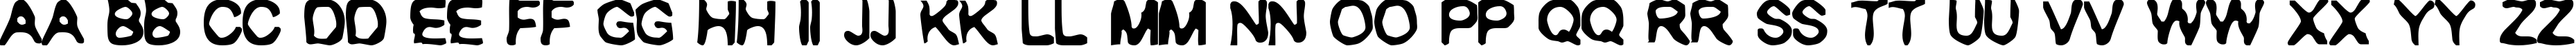 Пример написания английского алфавита шрифтом RANXEROX